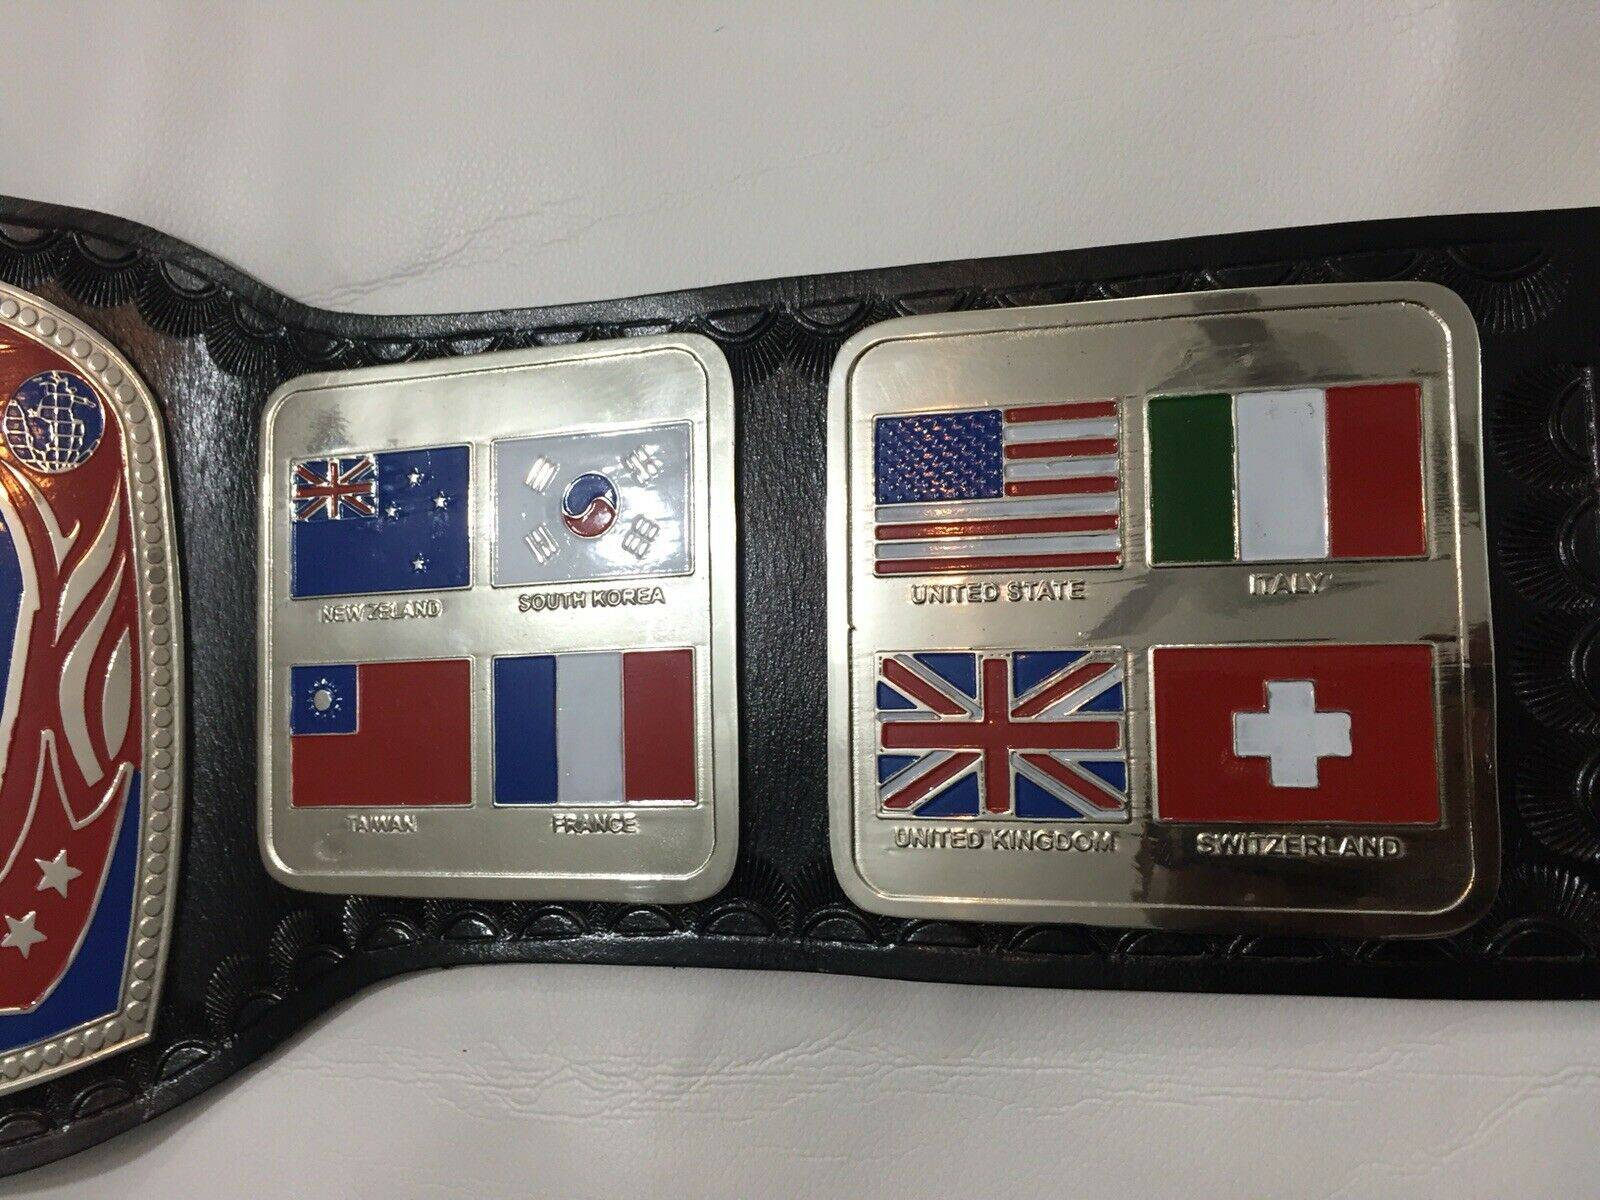 GEORGIA TELEVISION Championship Belt - Zees Belts